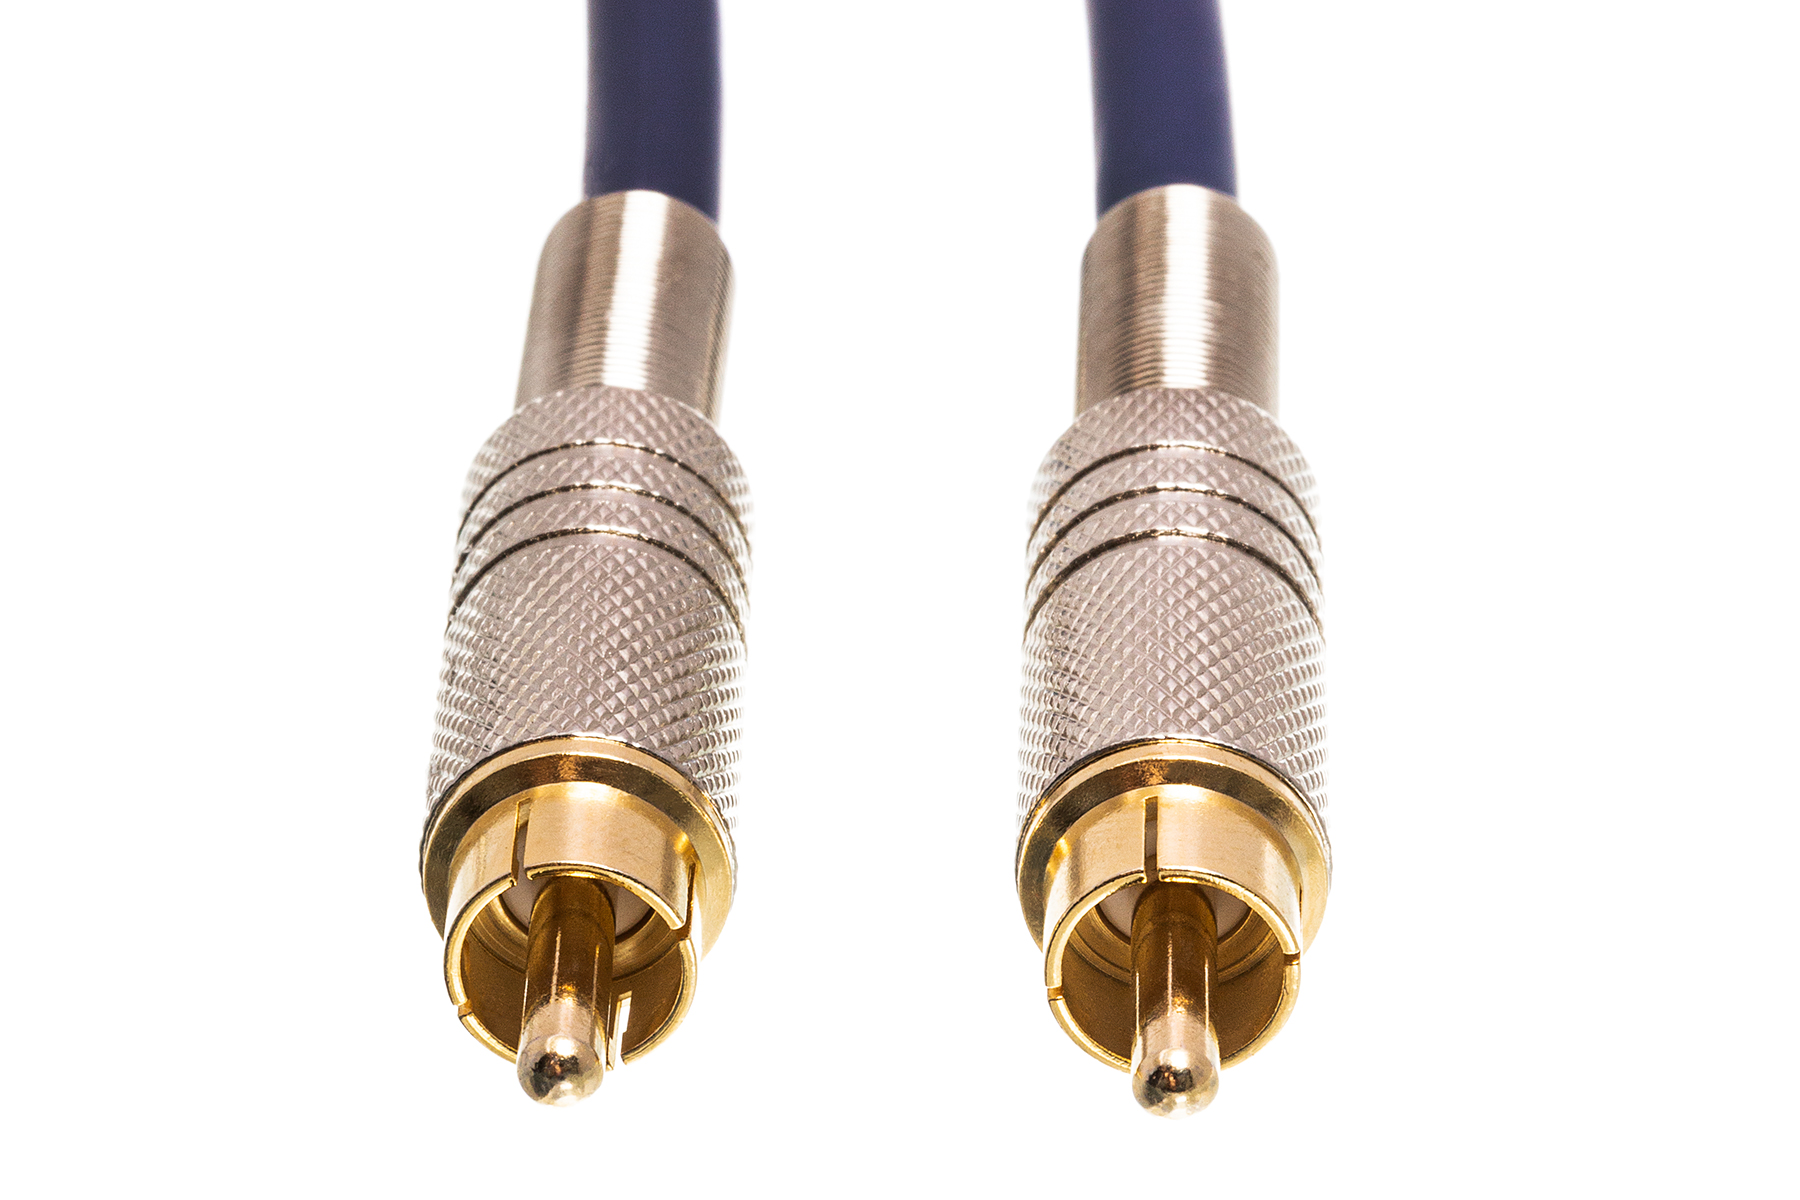 SPDIF coaxial digital audio cable (Phono RCA - 3.5 mm. Jack)